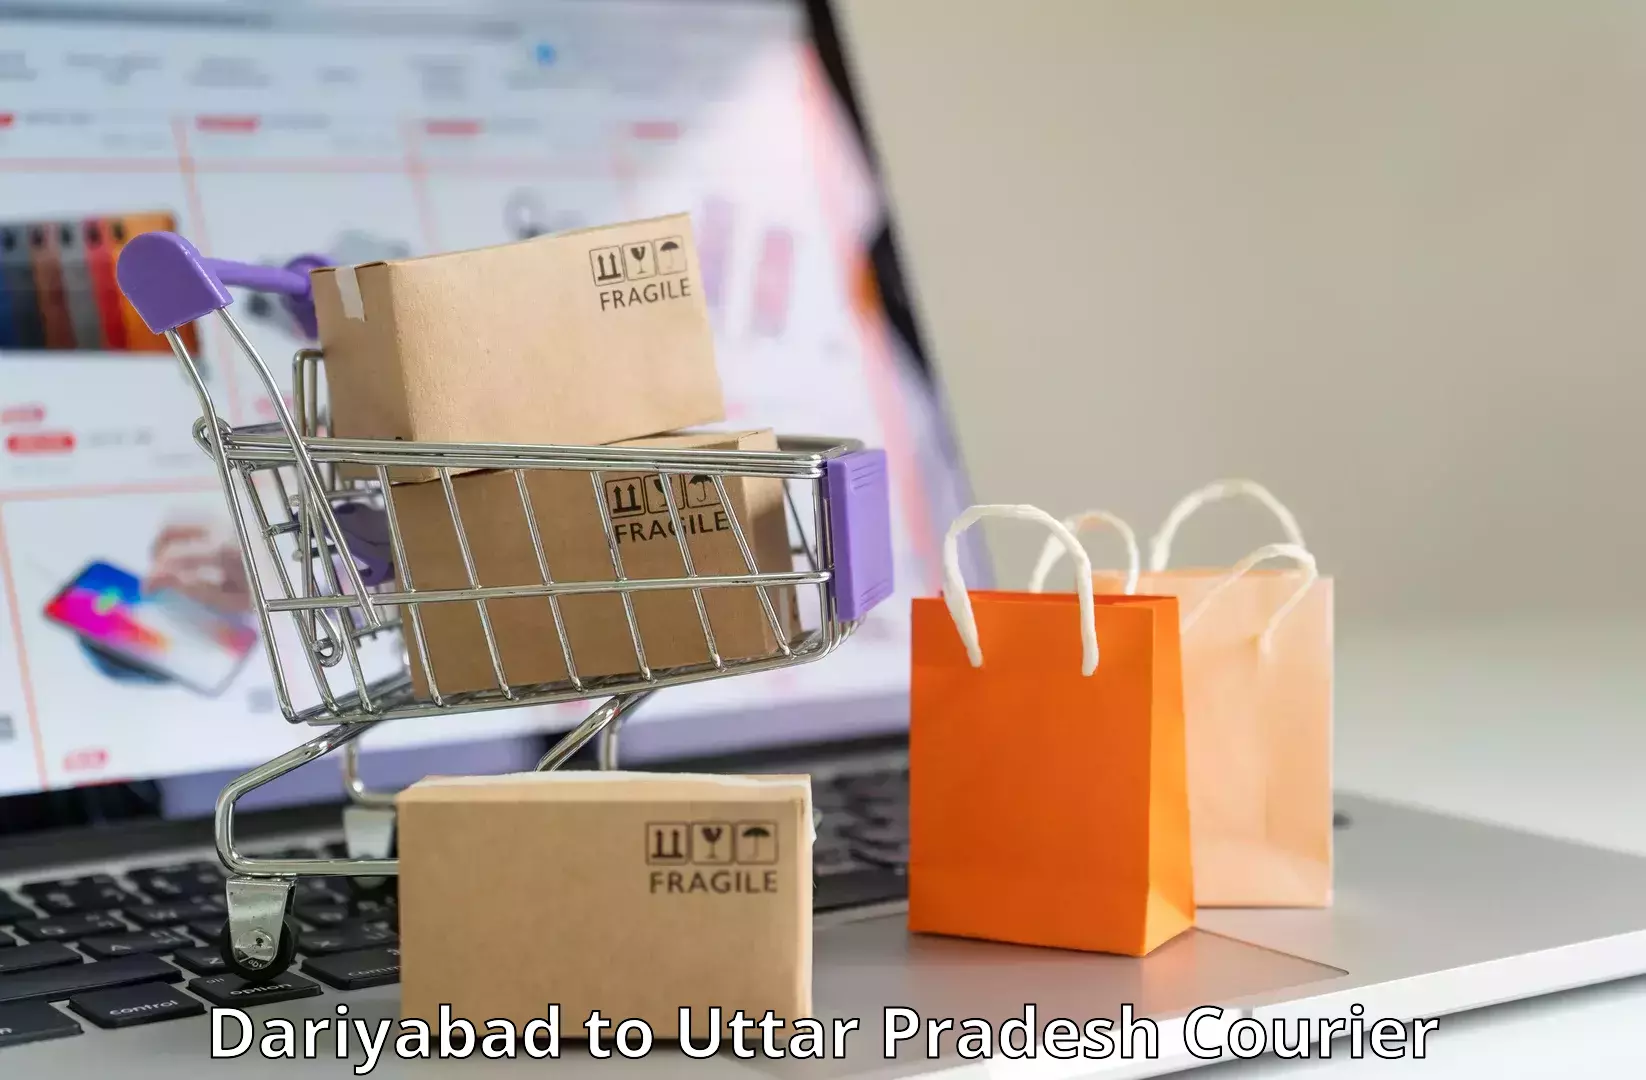 Logistics service provider Dariyabad to Uttar Pradesh